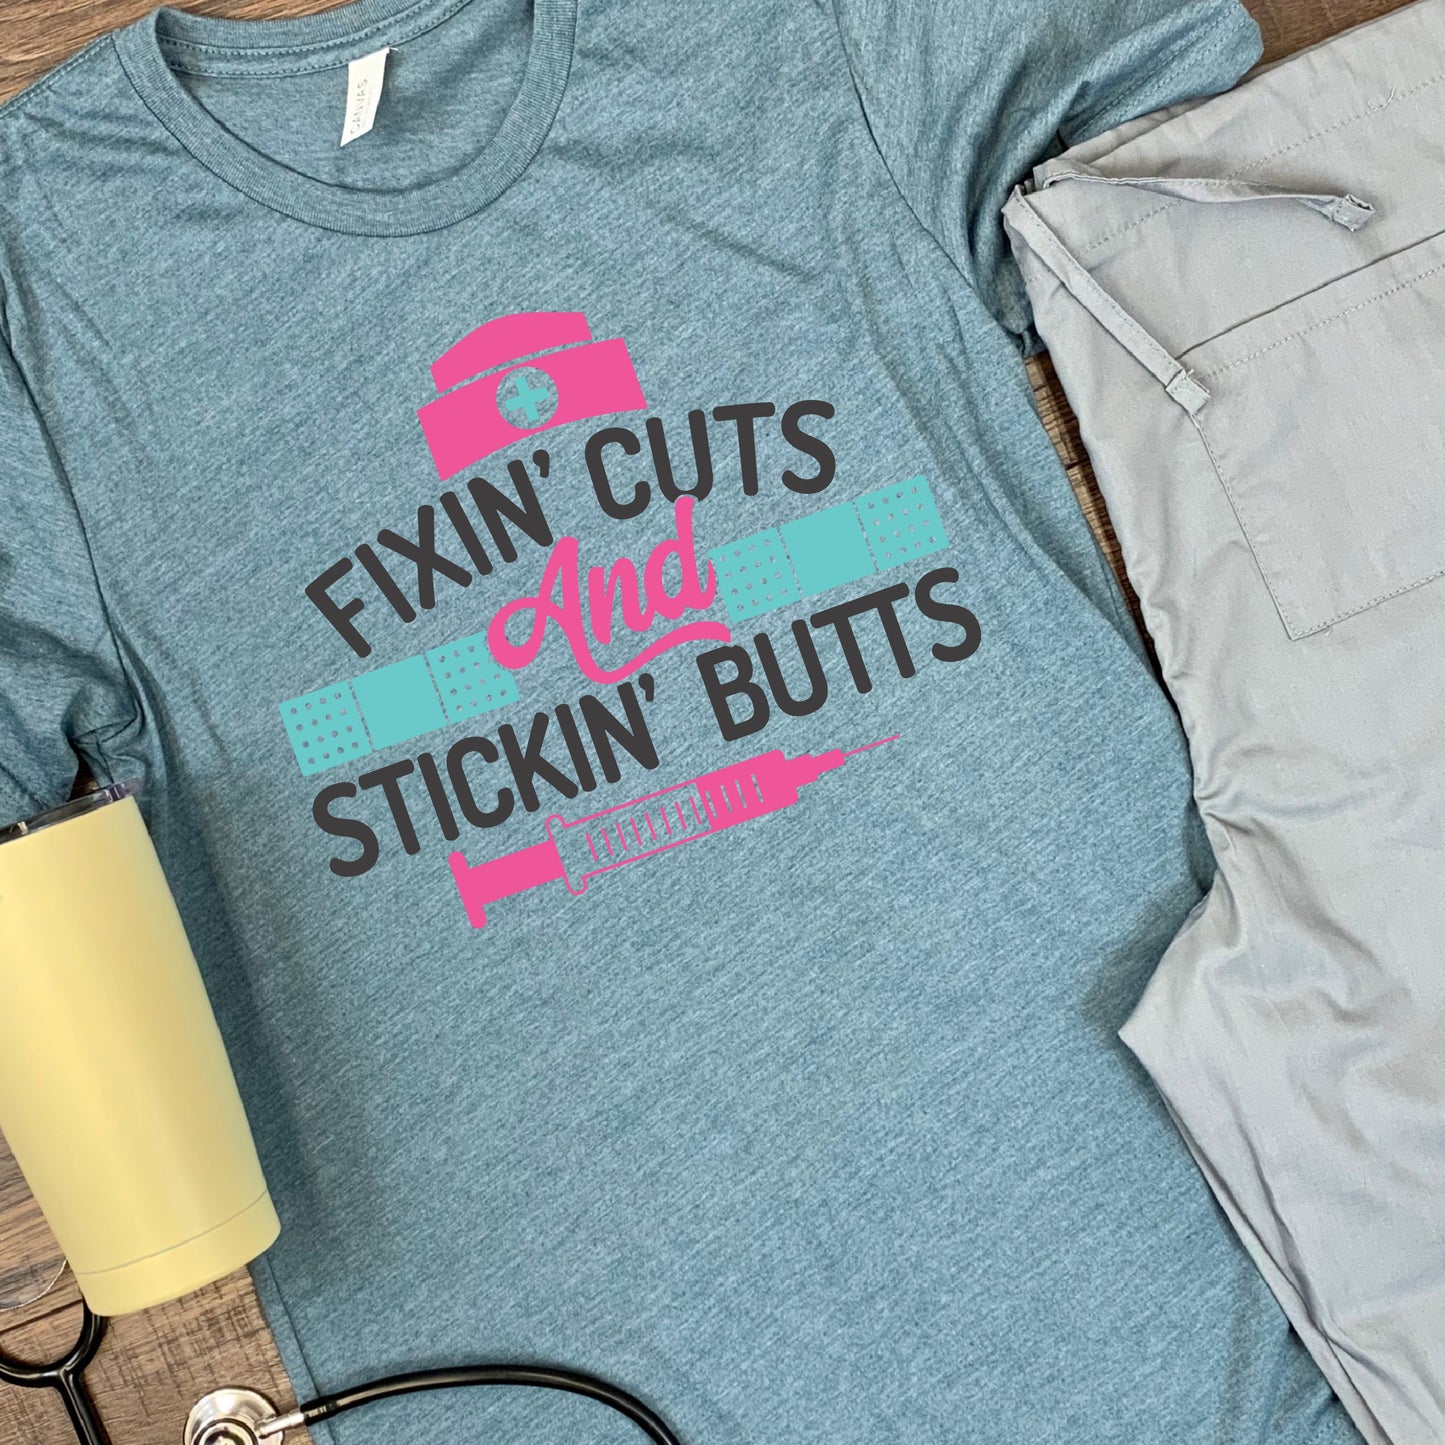 Fun, custom "Fixin cuts and stickin butts" T-shirt